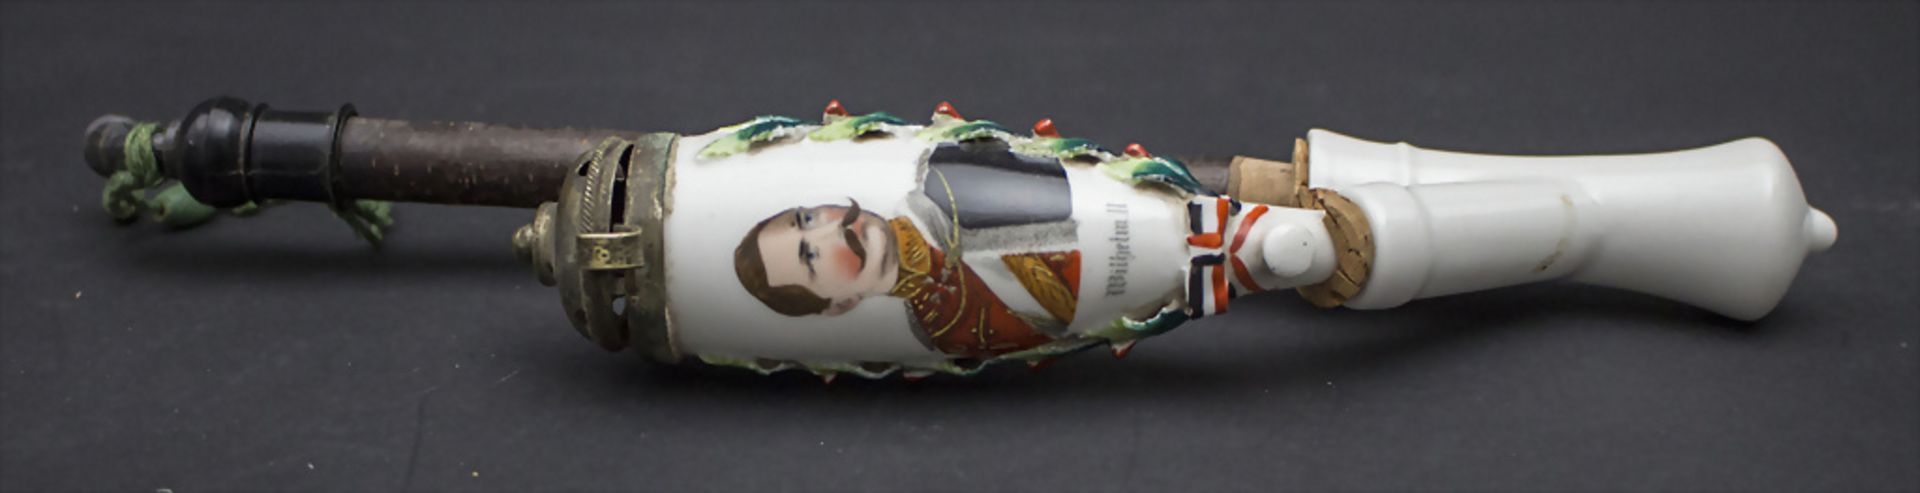 Reservistenpfeife 'Wilhelm II' / 'A reservist pipe, William II'